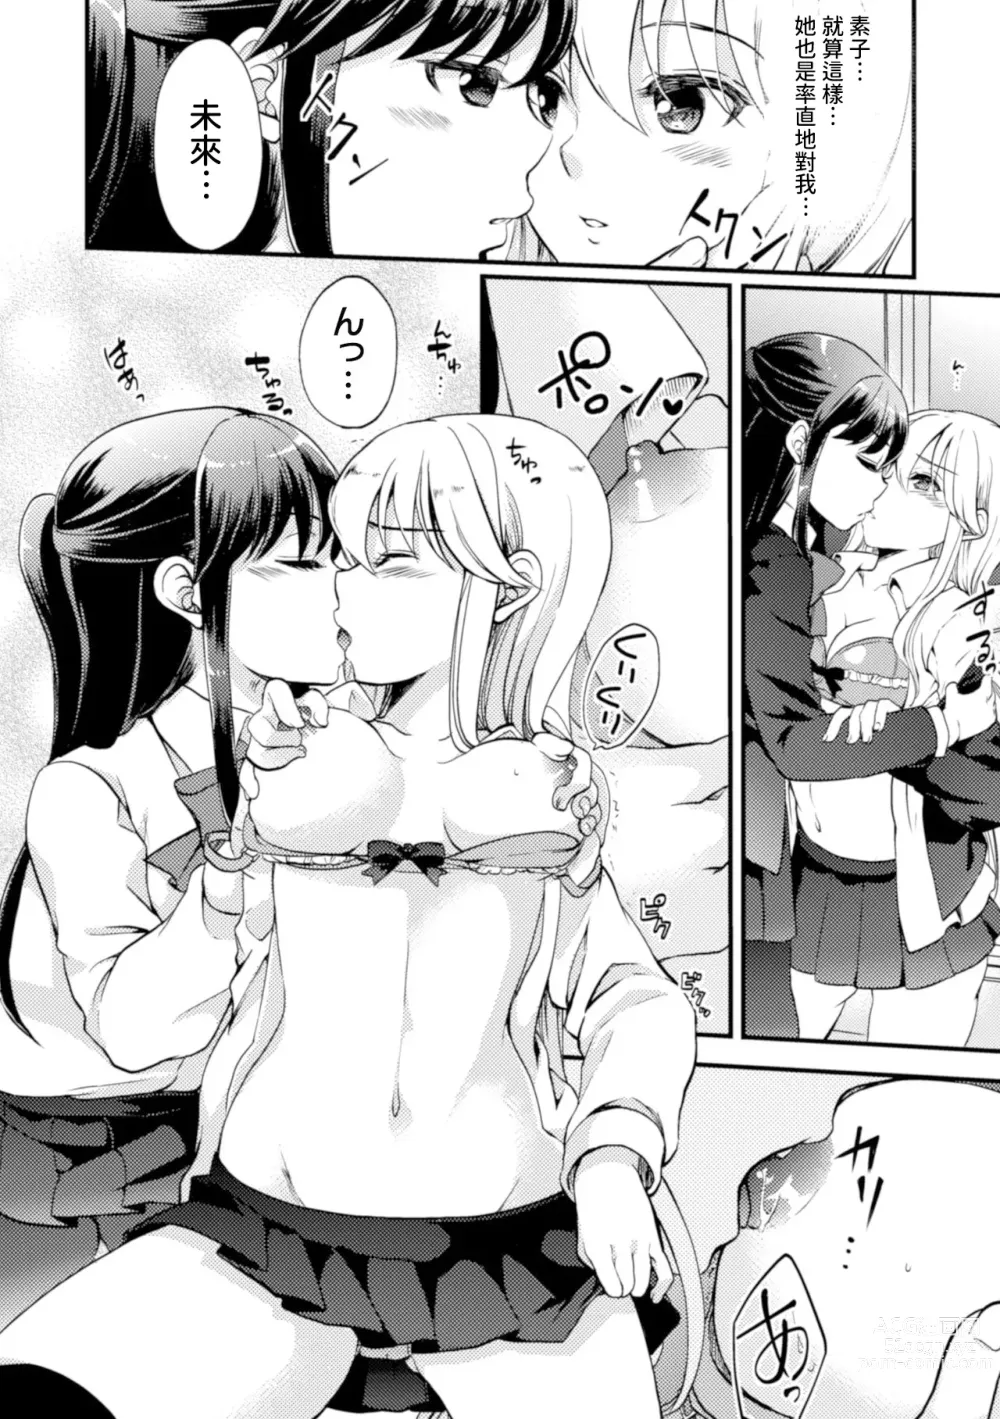 Page 20 of manga Kiminogoe ga Kikoeru